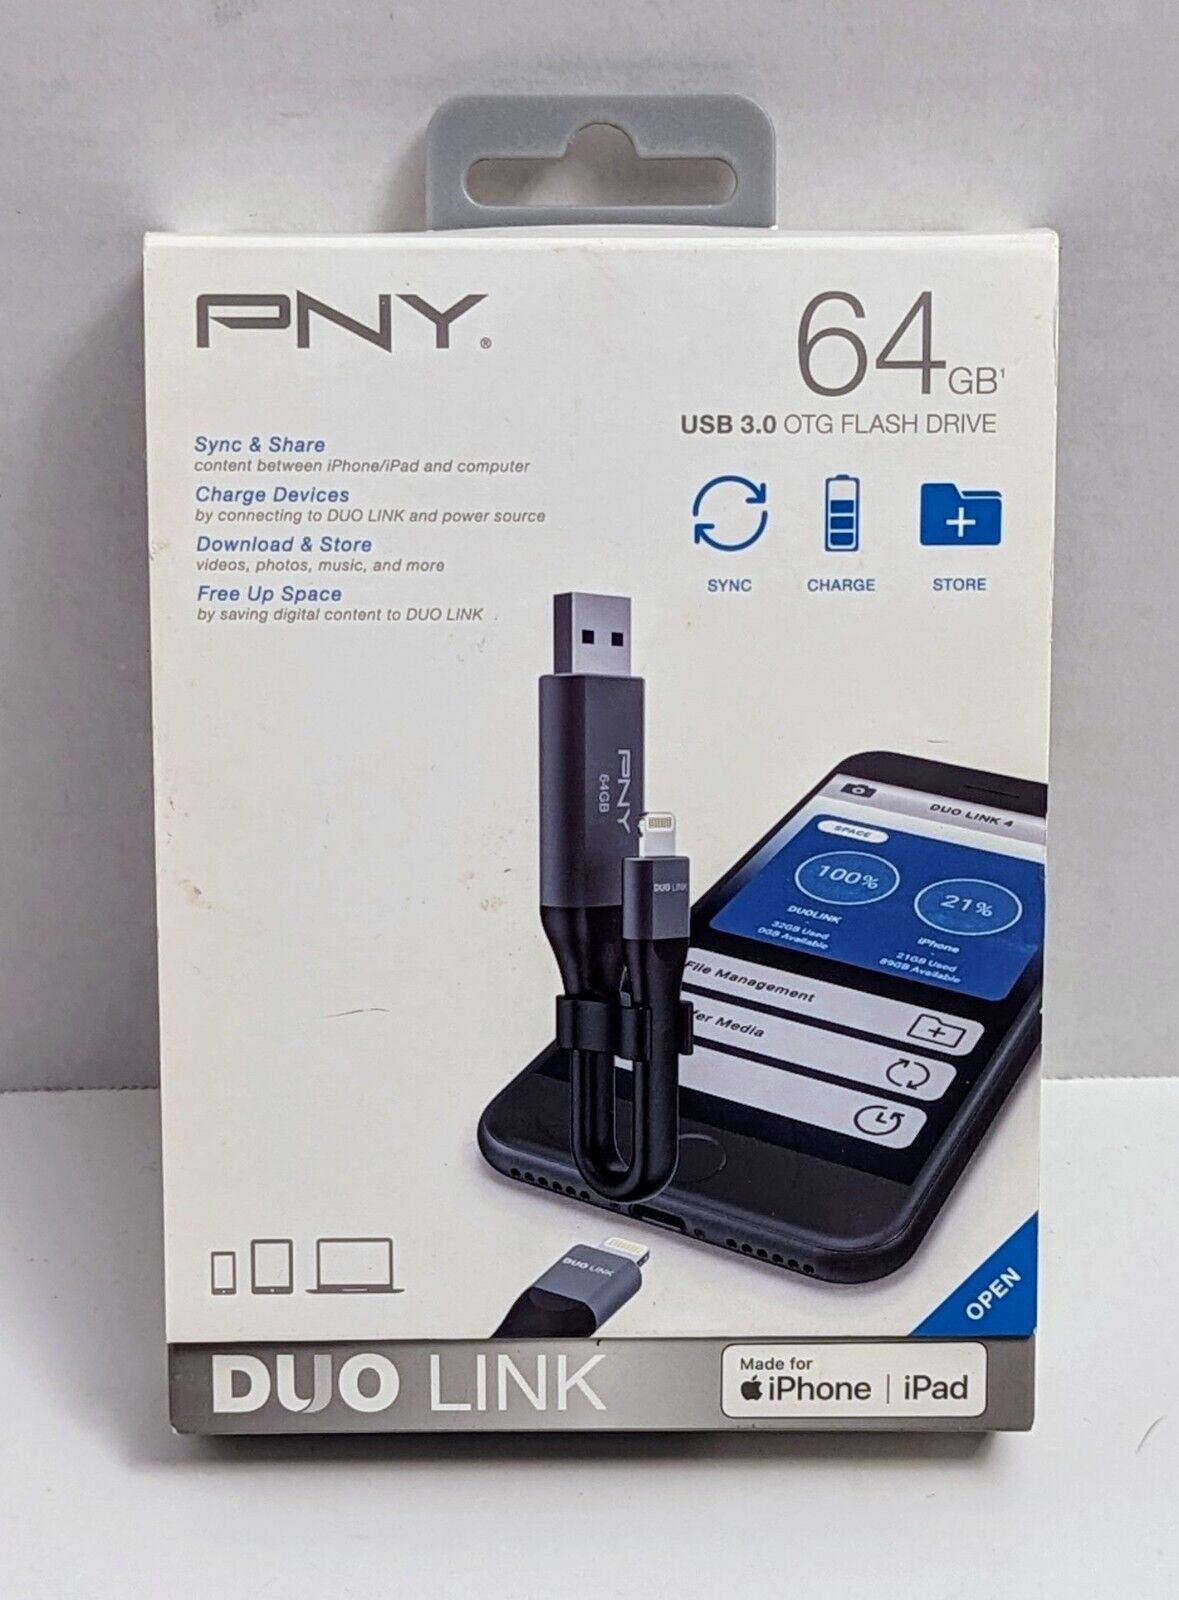 PNY 64GB DUO LINK iOS USB 3.0 OTG Flash Drive - BRAND NEW SEALED